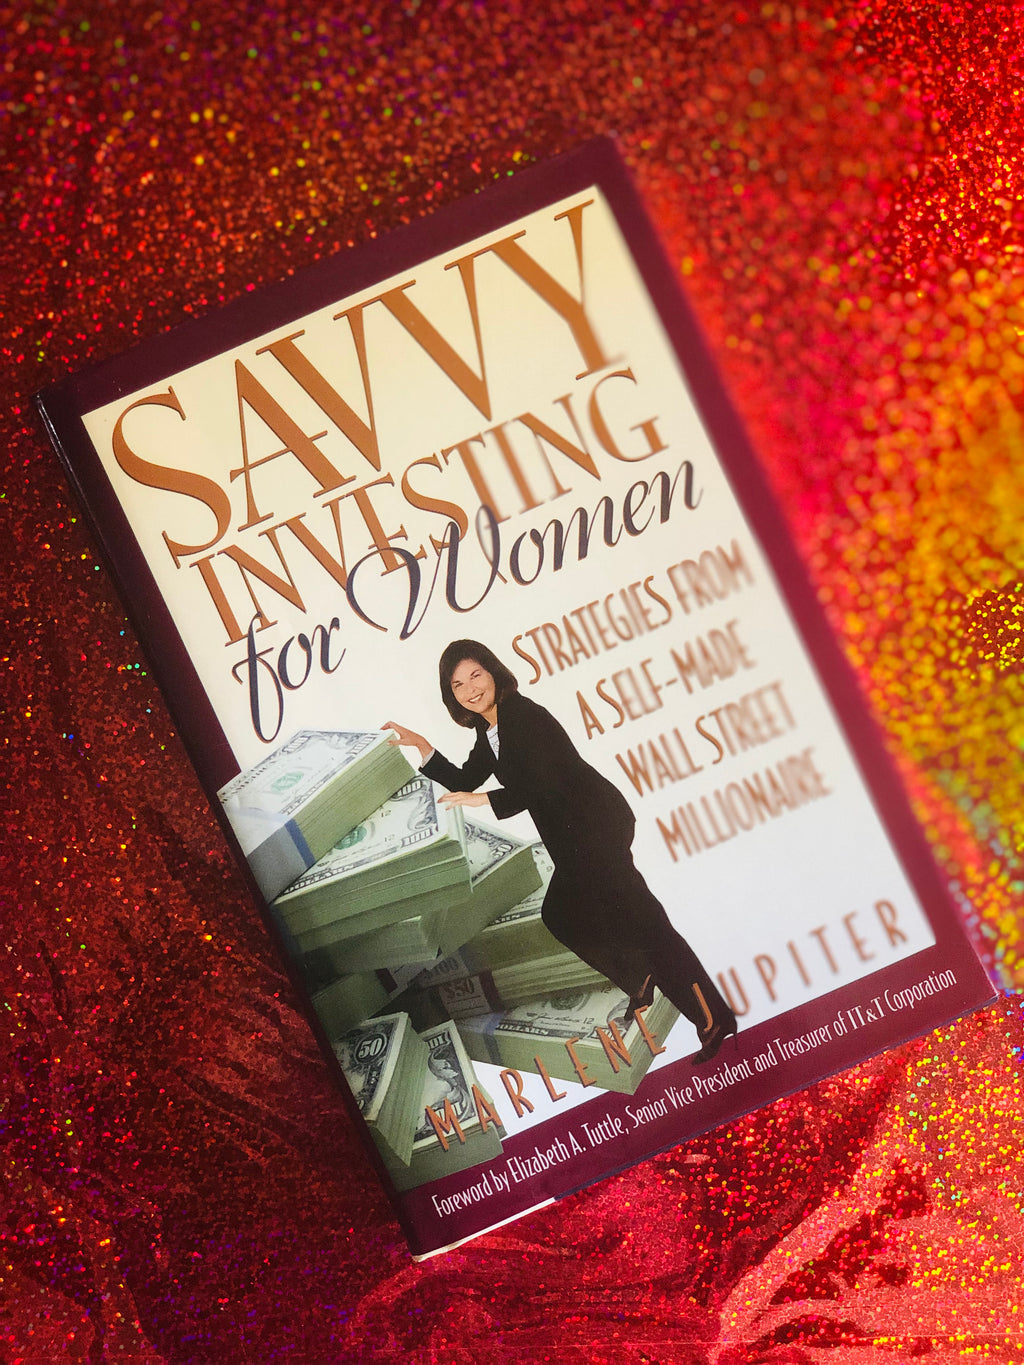 Savvy Investing For Women- By Marlene Jupiter